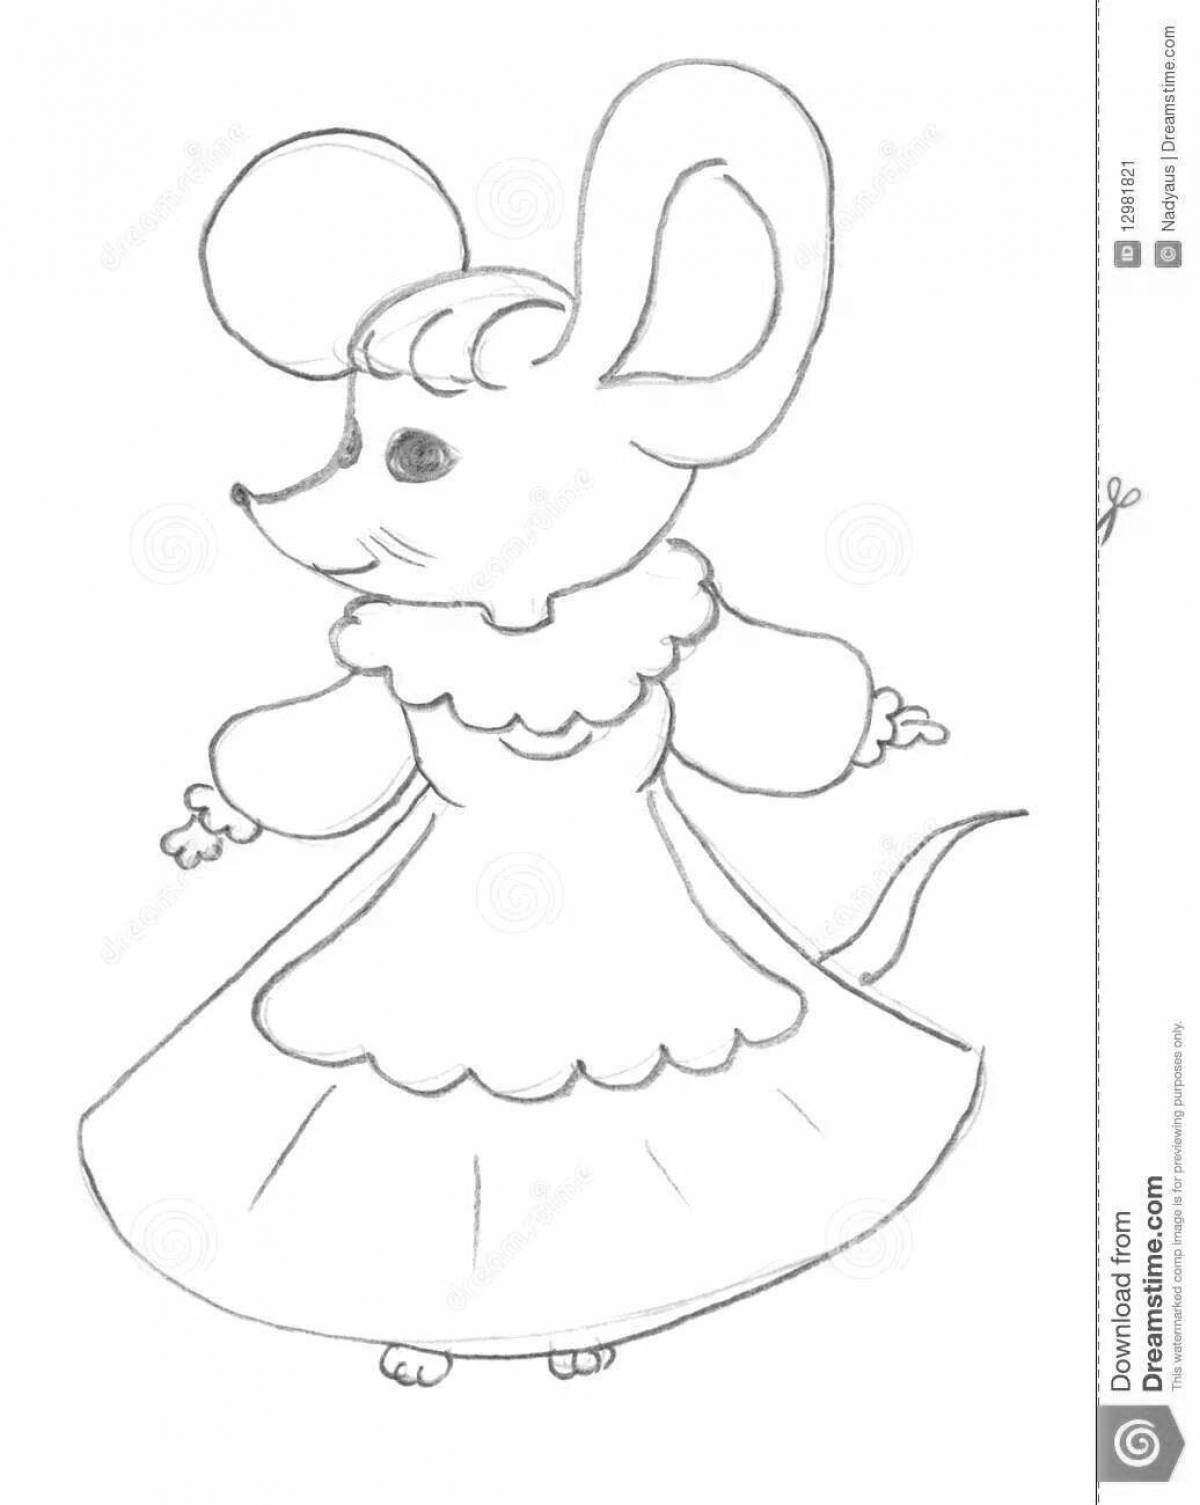 Coloring book magic mouse norushka